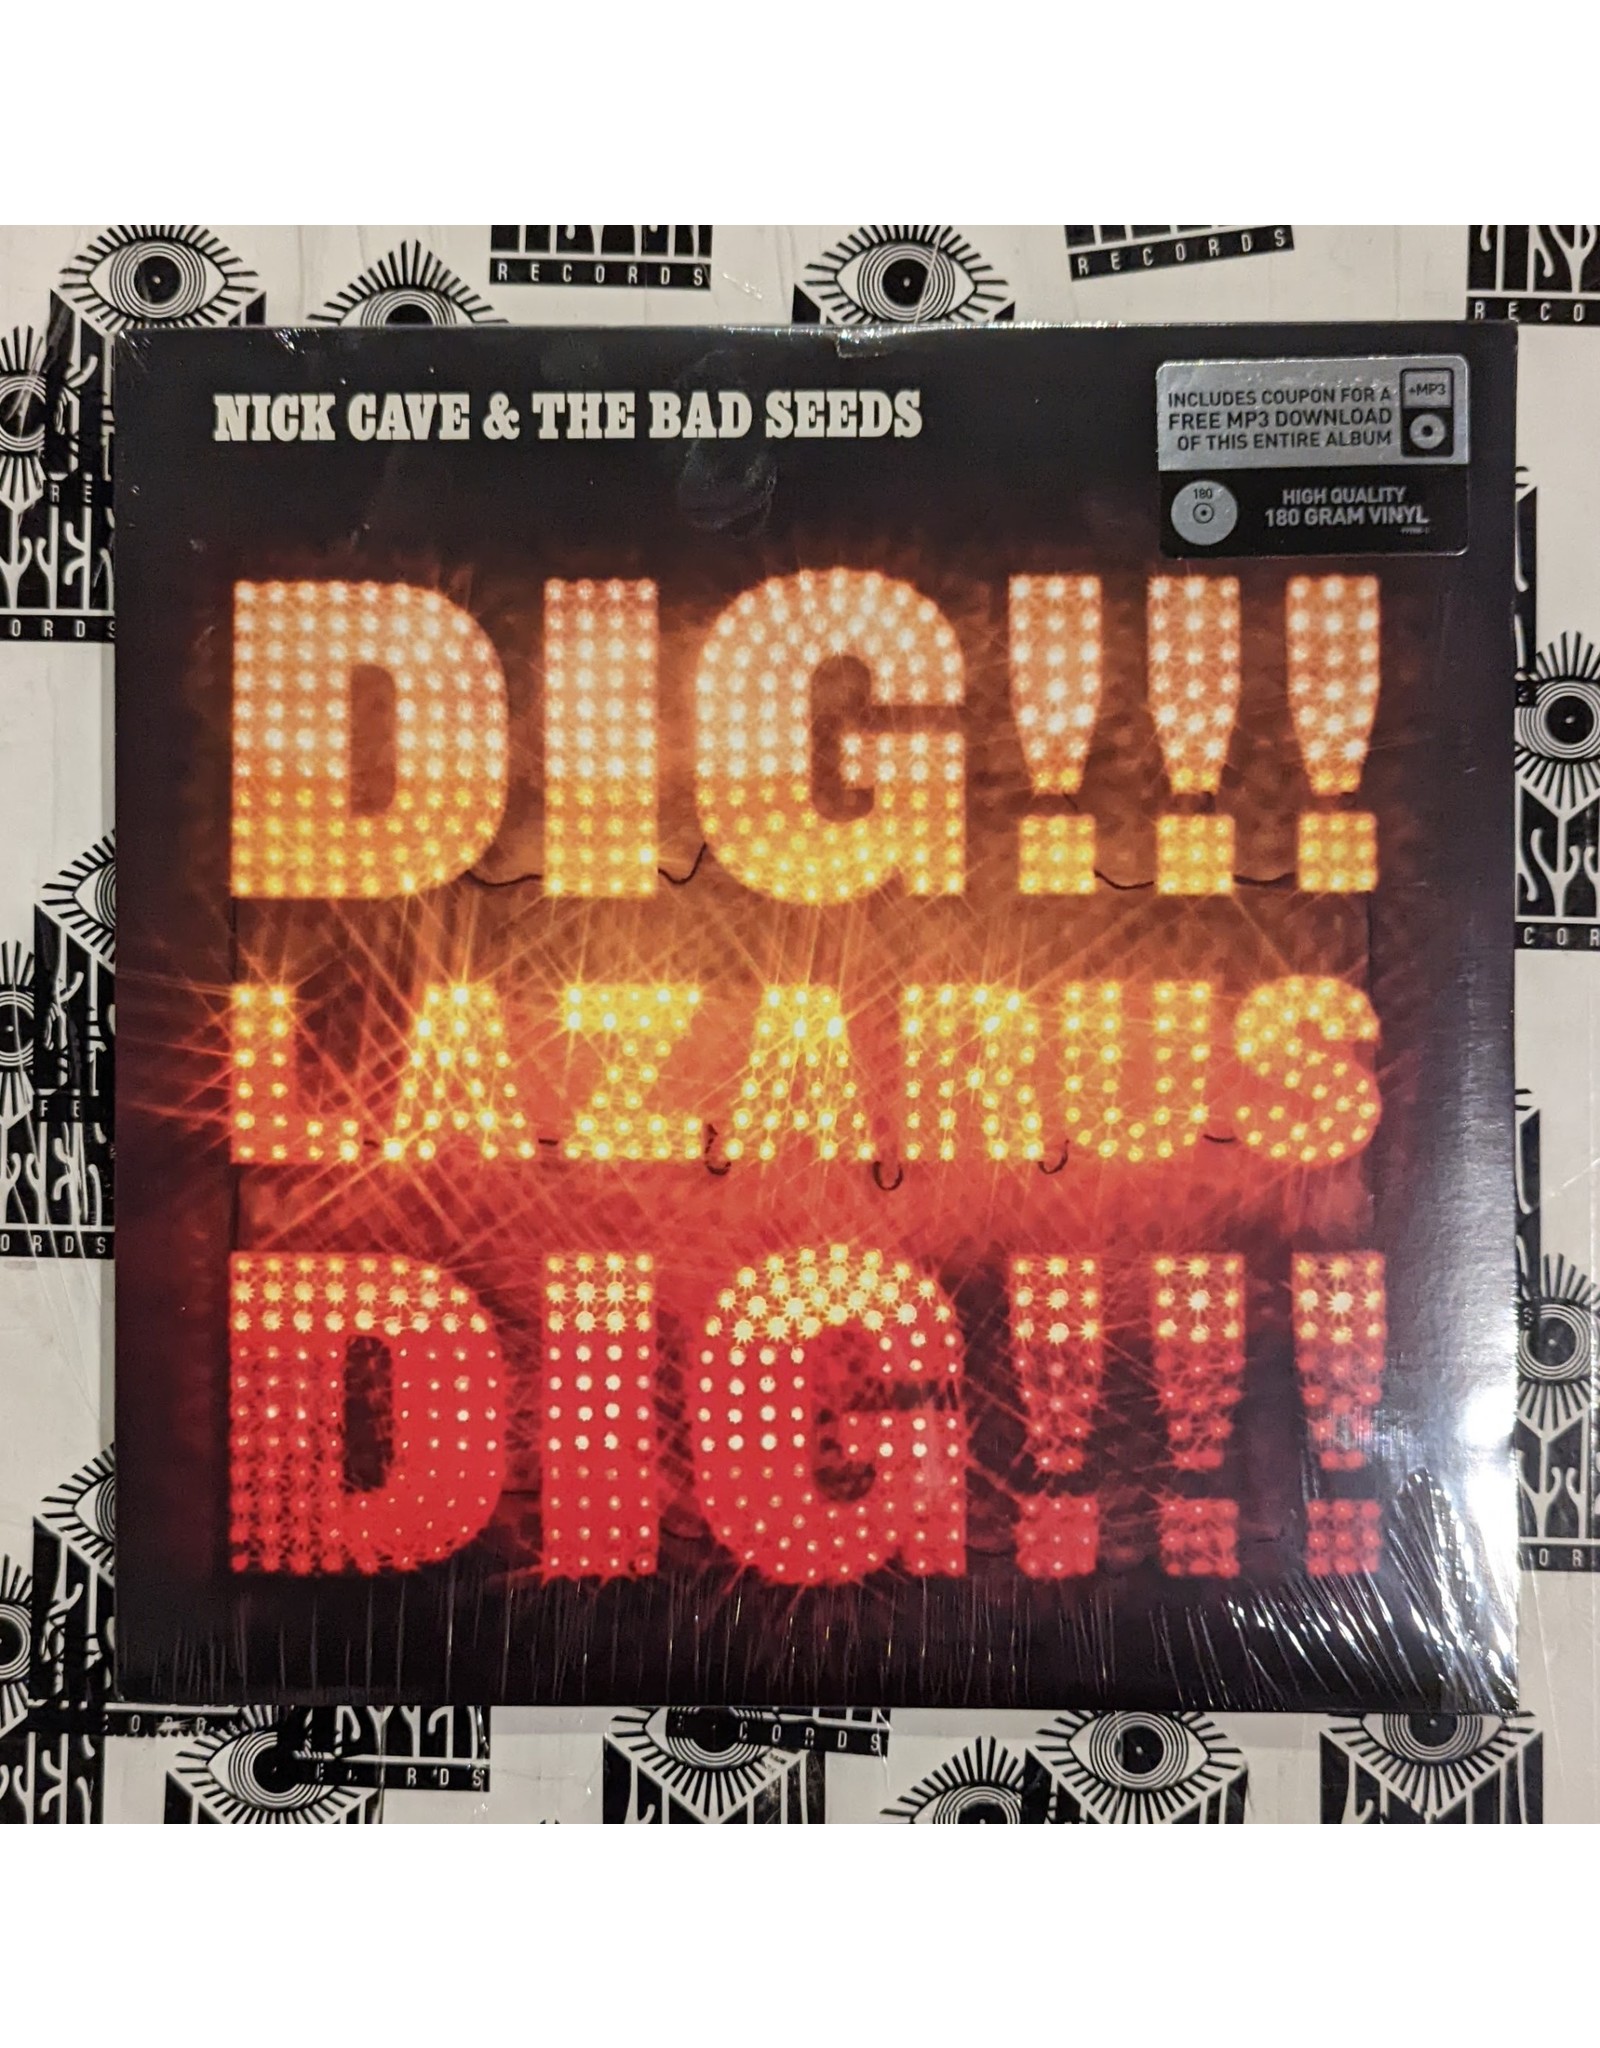 USED: Nick Cave & the Bad Seeds: Dig!!! Lazarus, Dig!!!